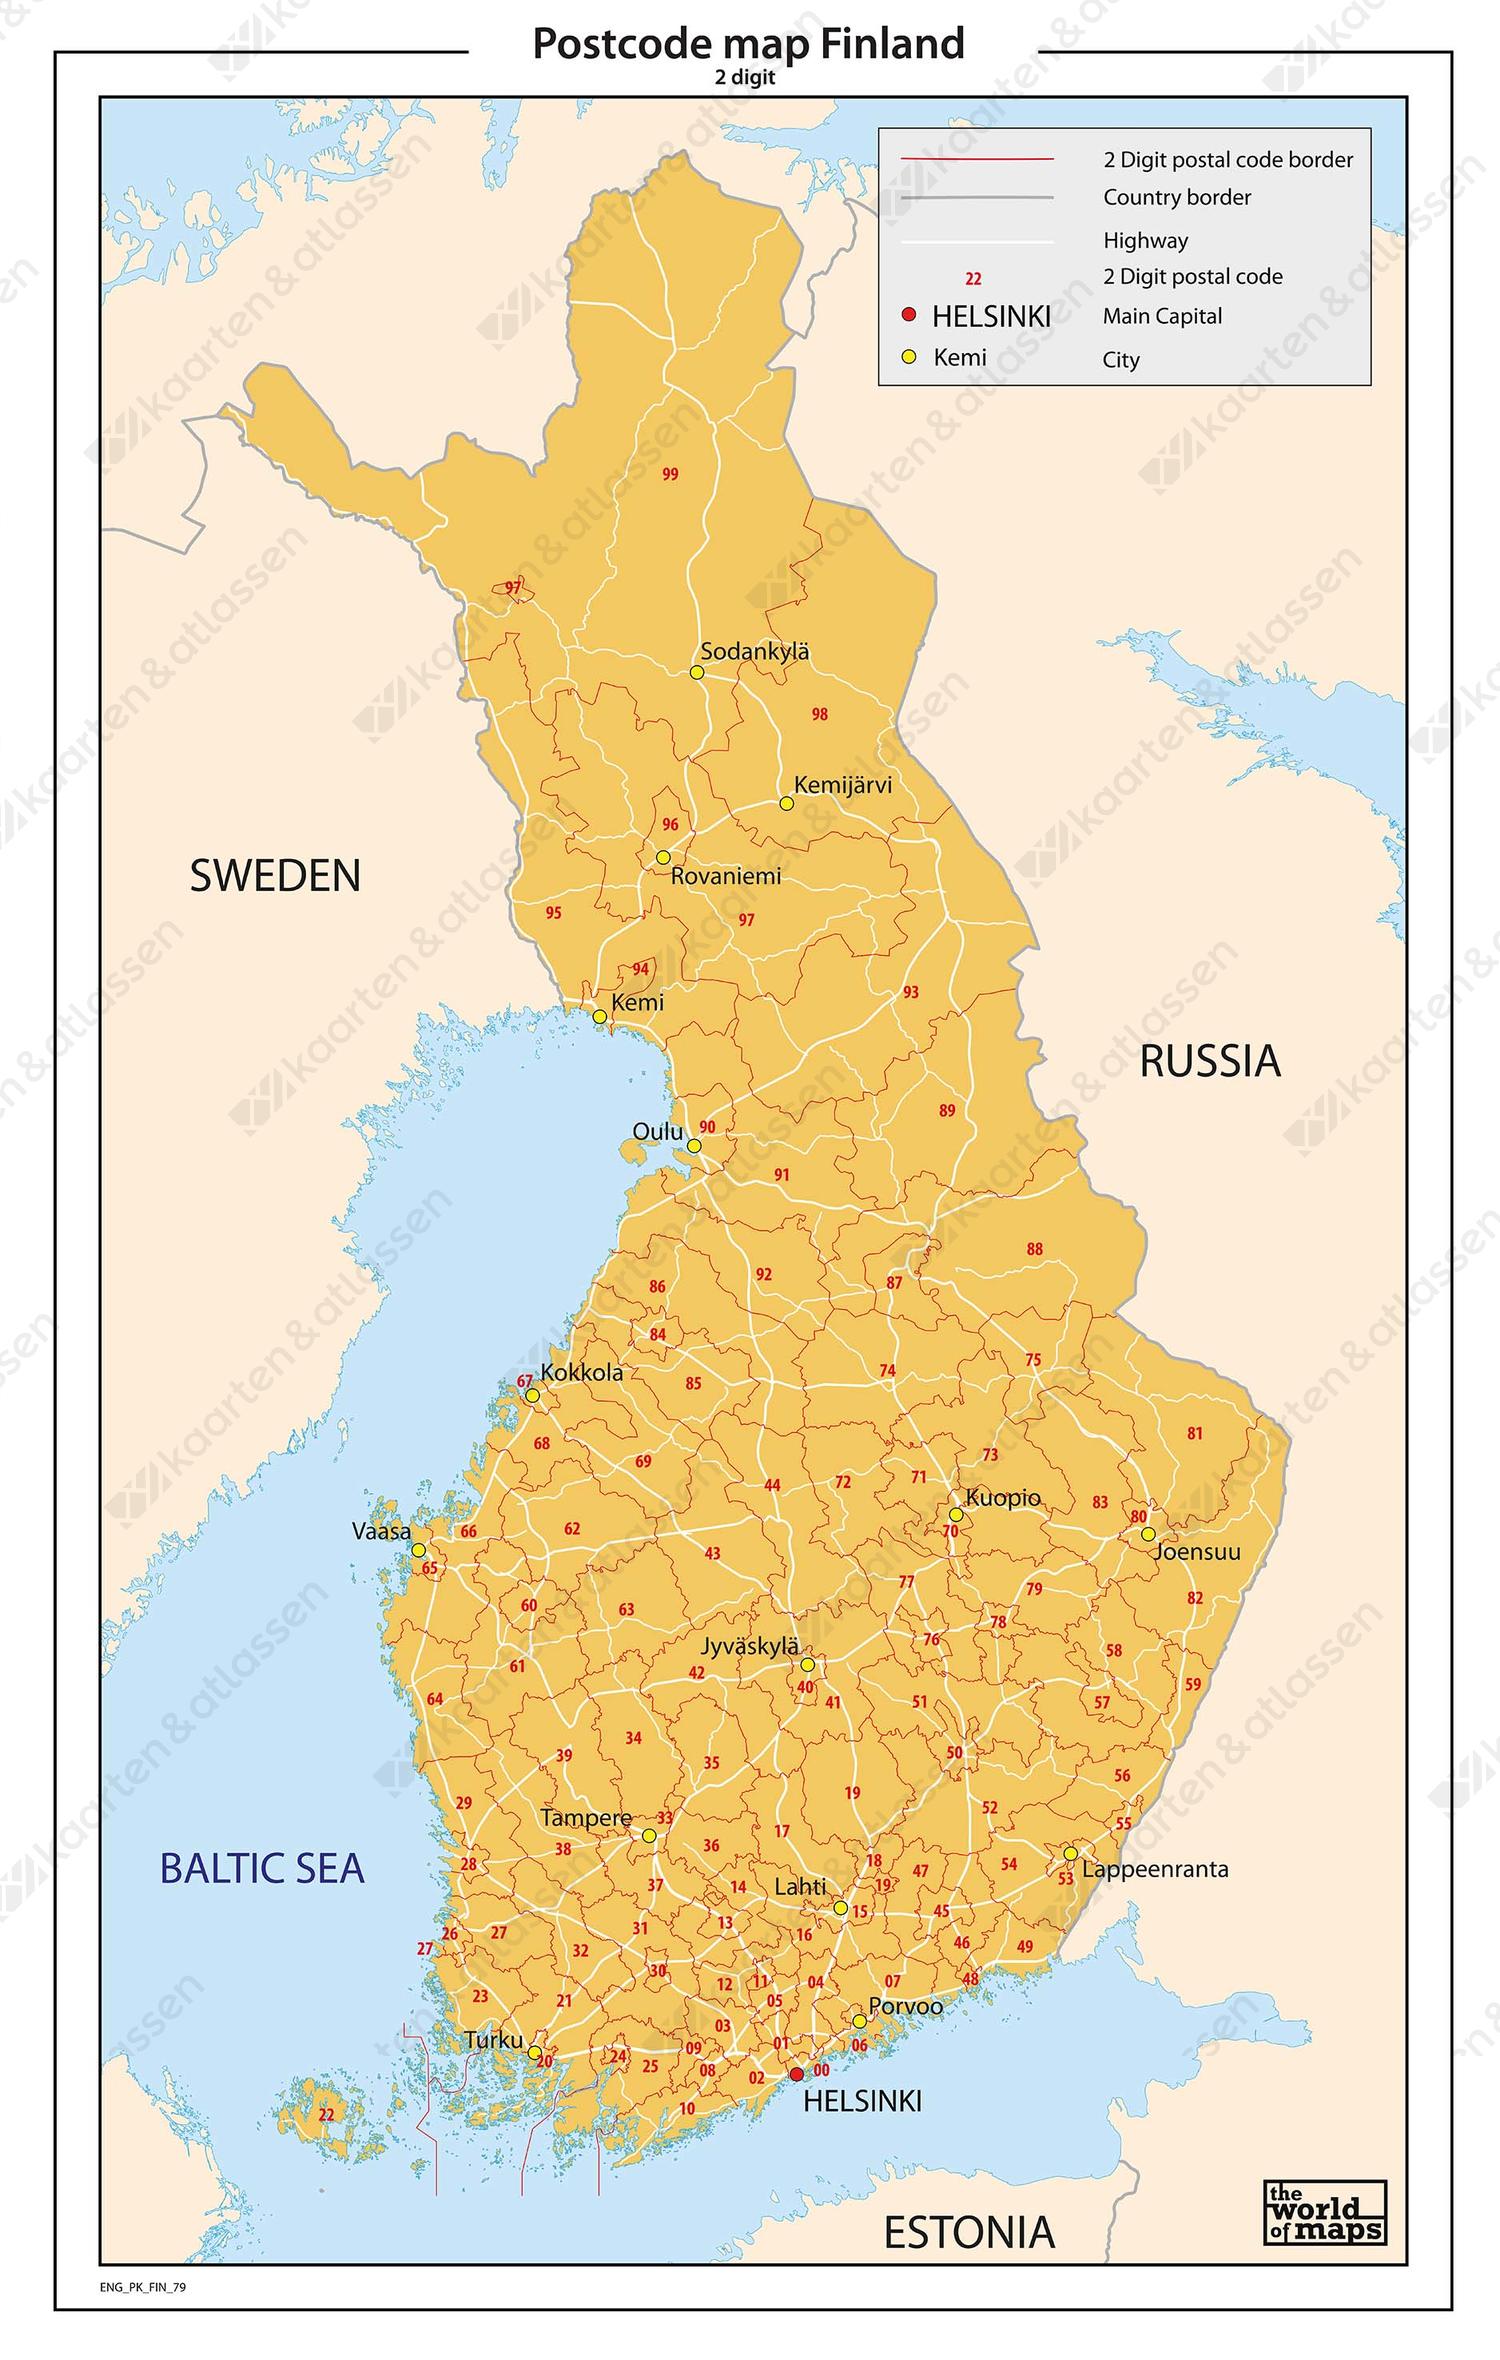 Digitale postcodekaart Finland 2-cijferig